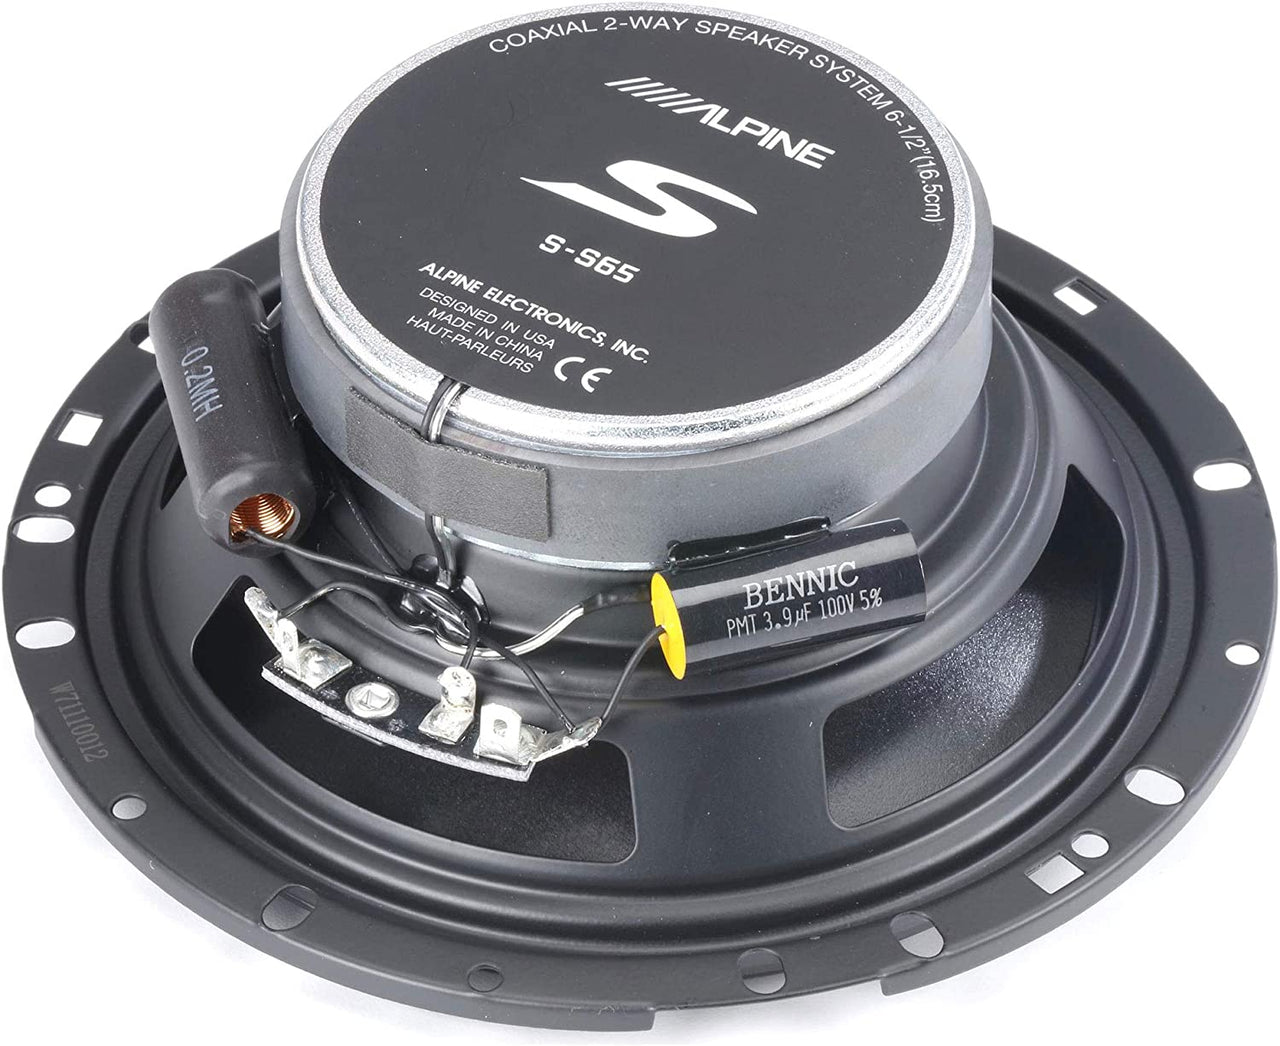 Alpine S-S65 Car Speaker<br/>480W Max (160W RMS) 6.5" Type-S 2-Way Coaxial Car Speakers